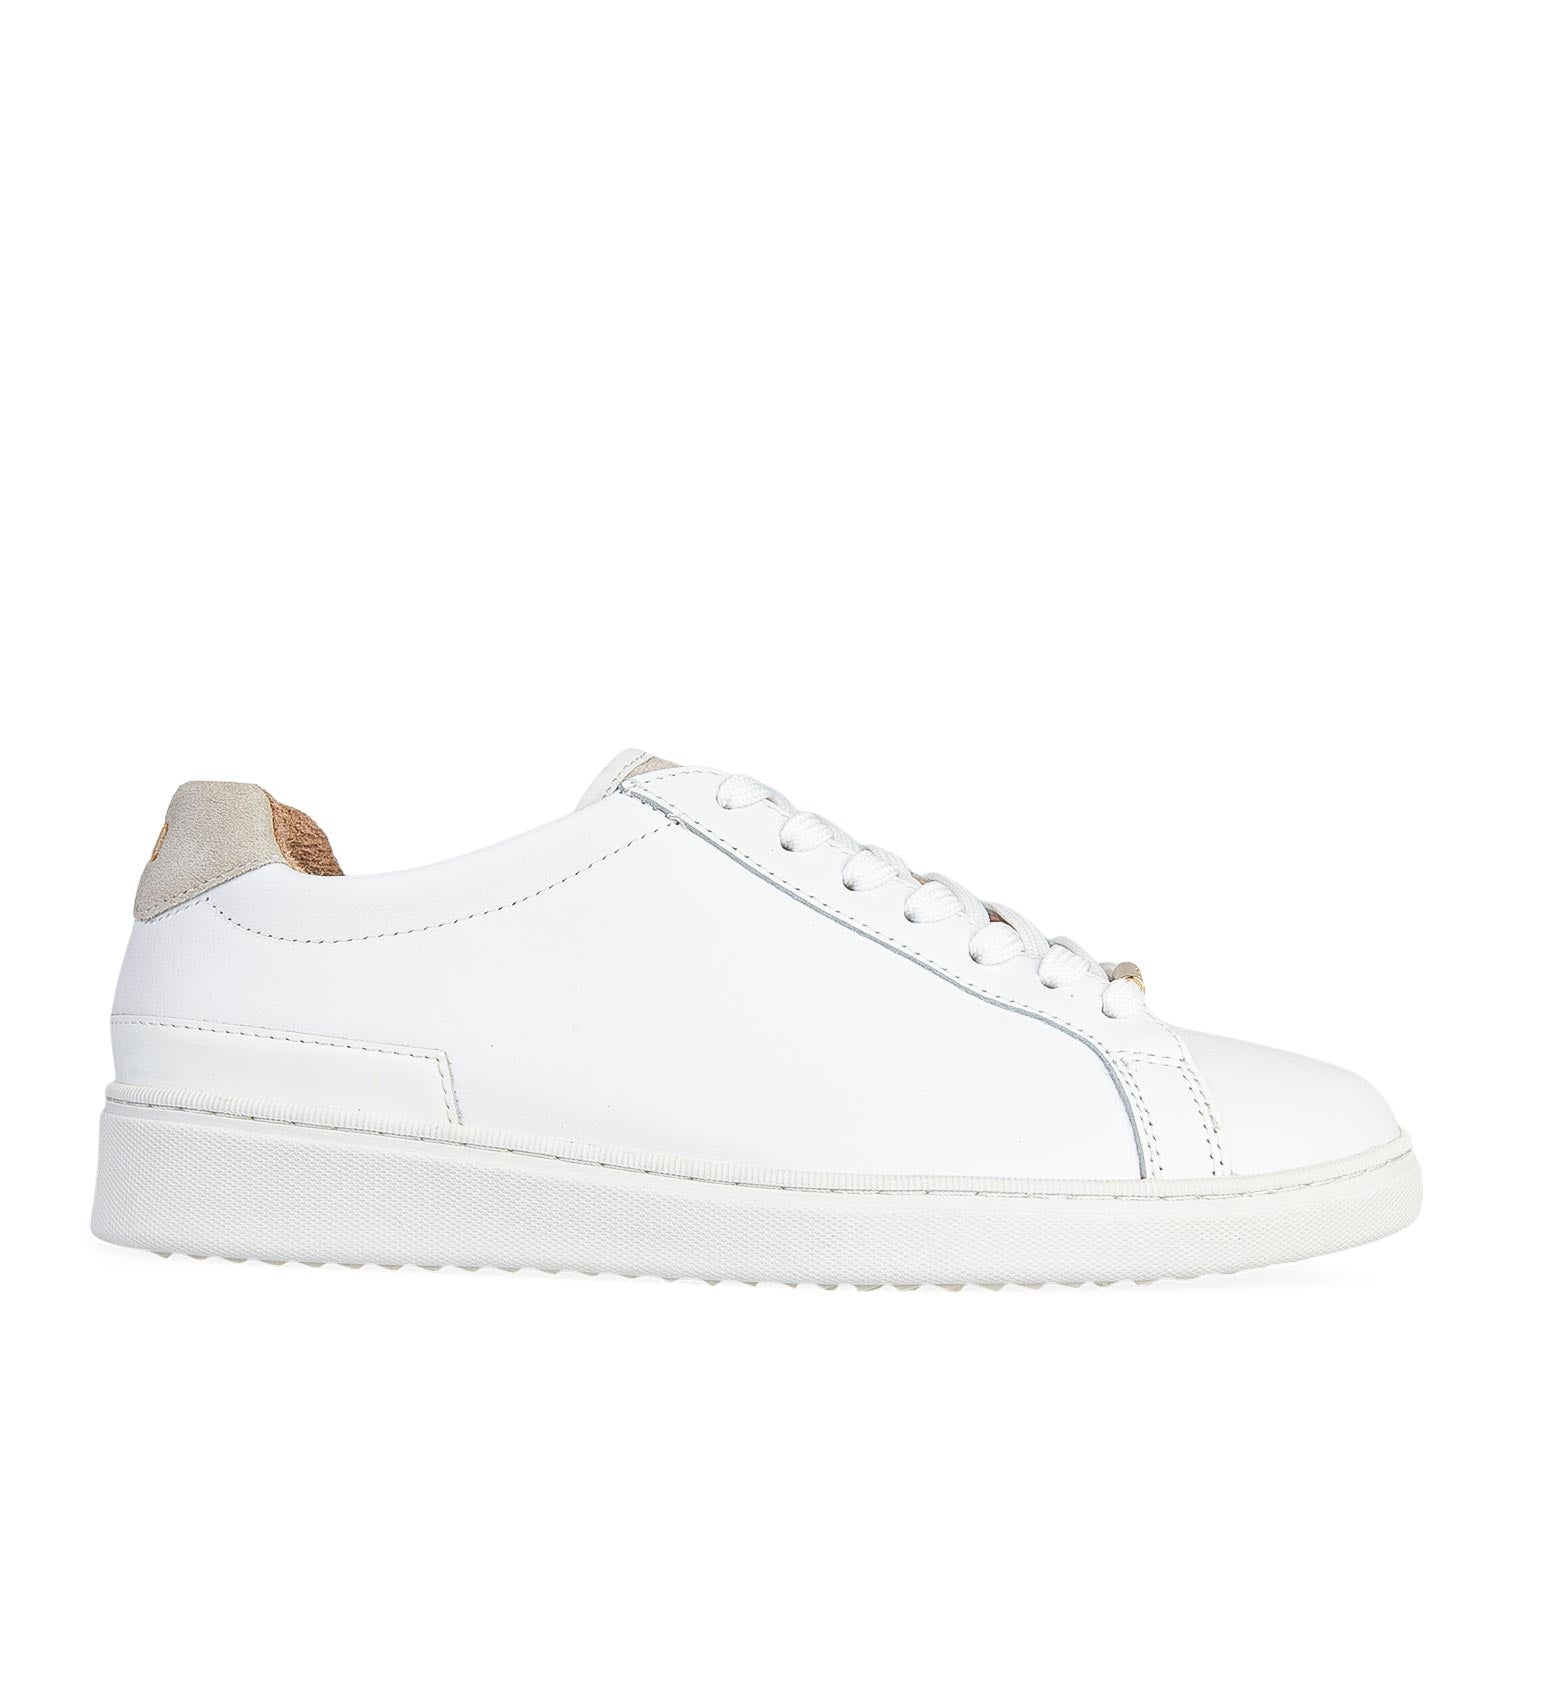 Hornbill 3 White Leather Sneakers | Bared Footwear